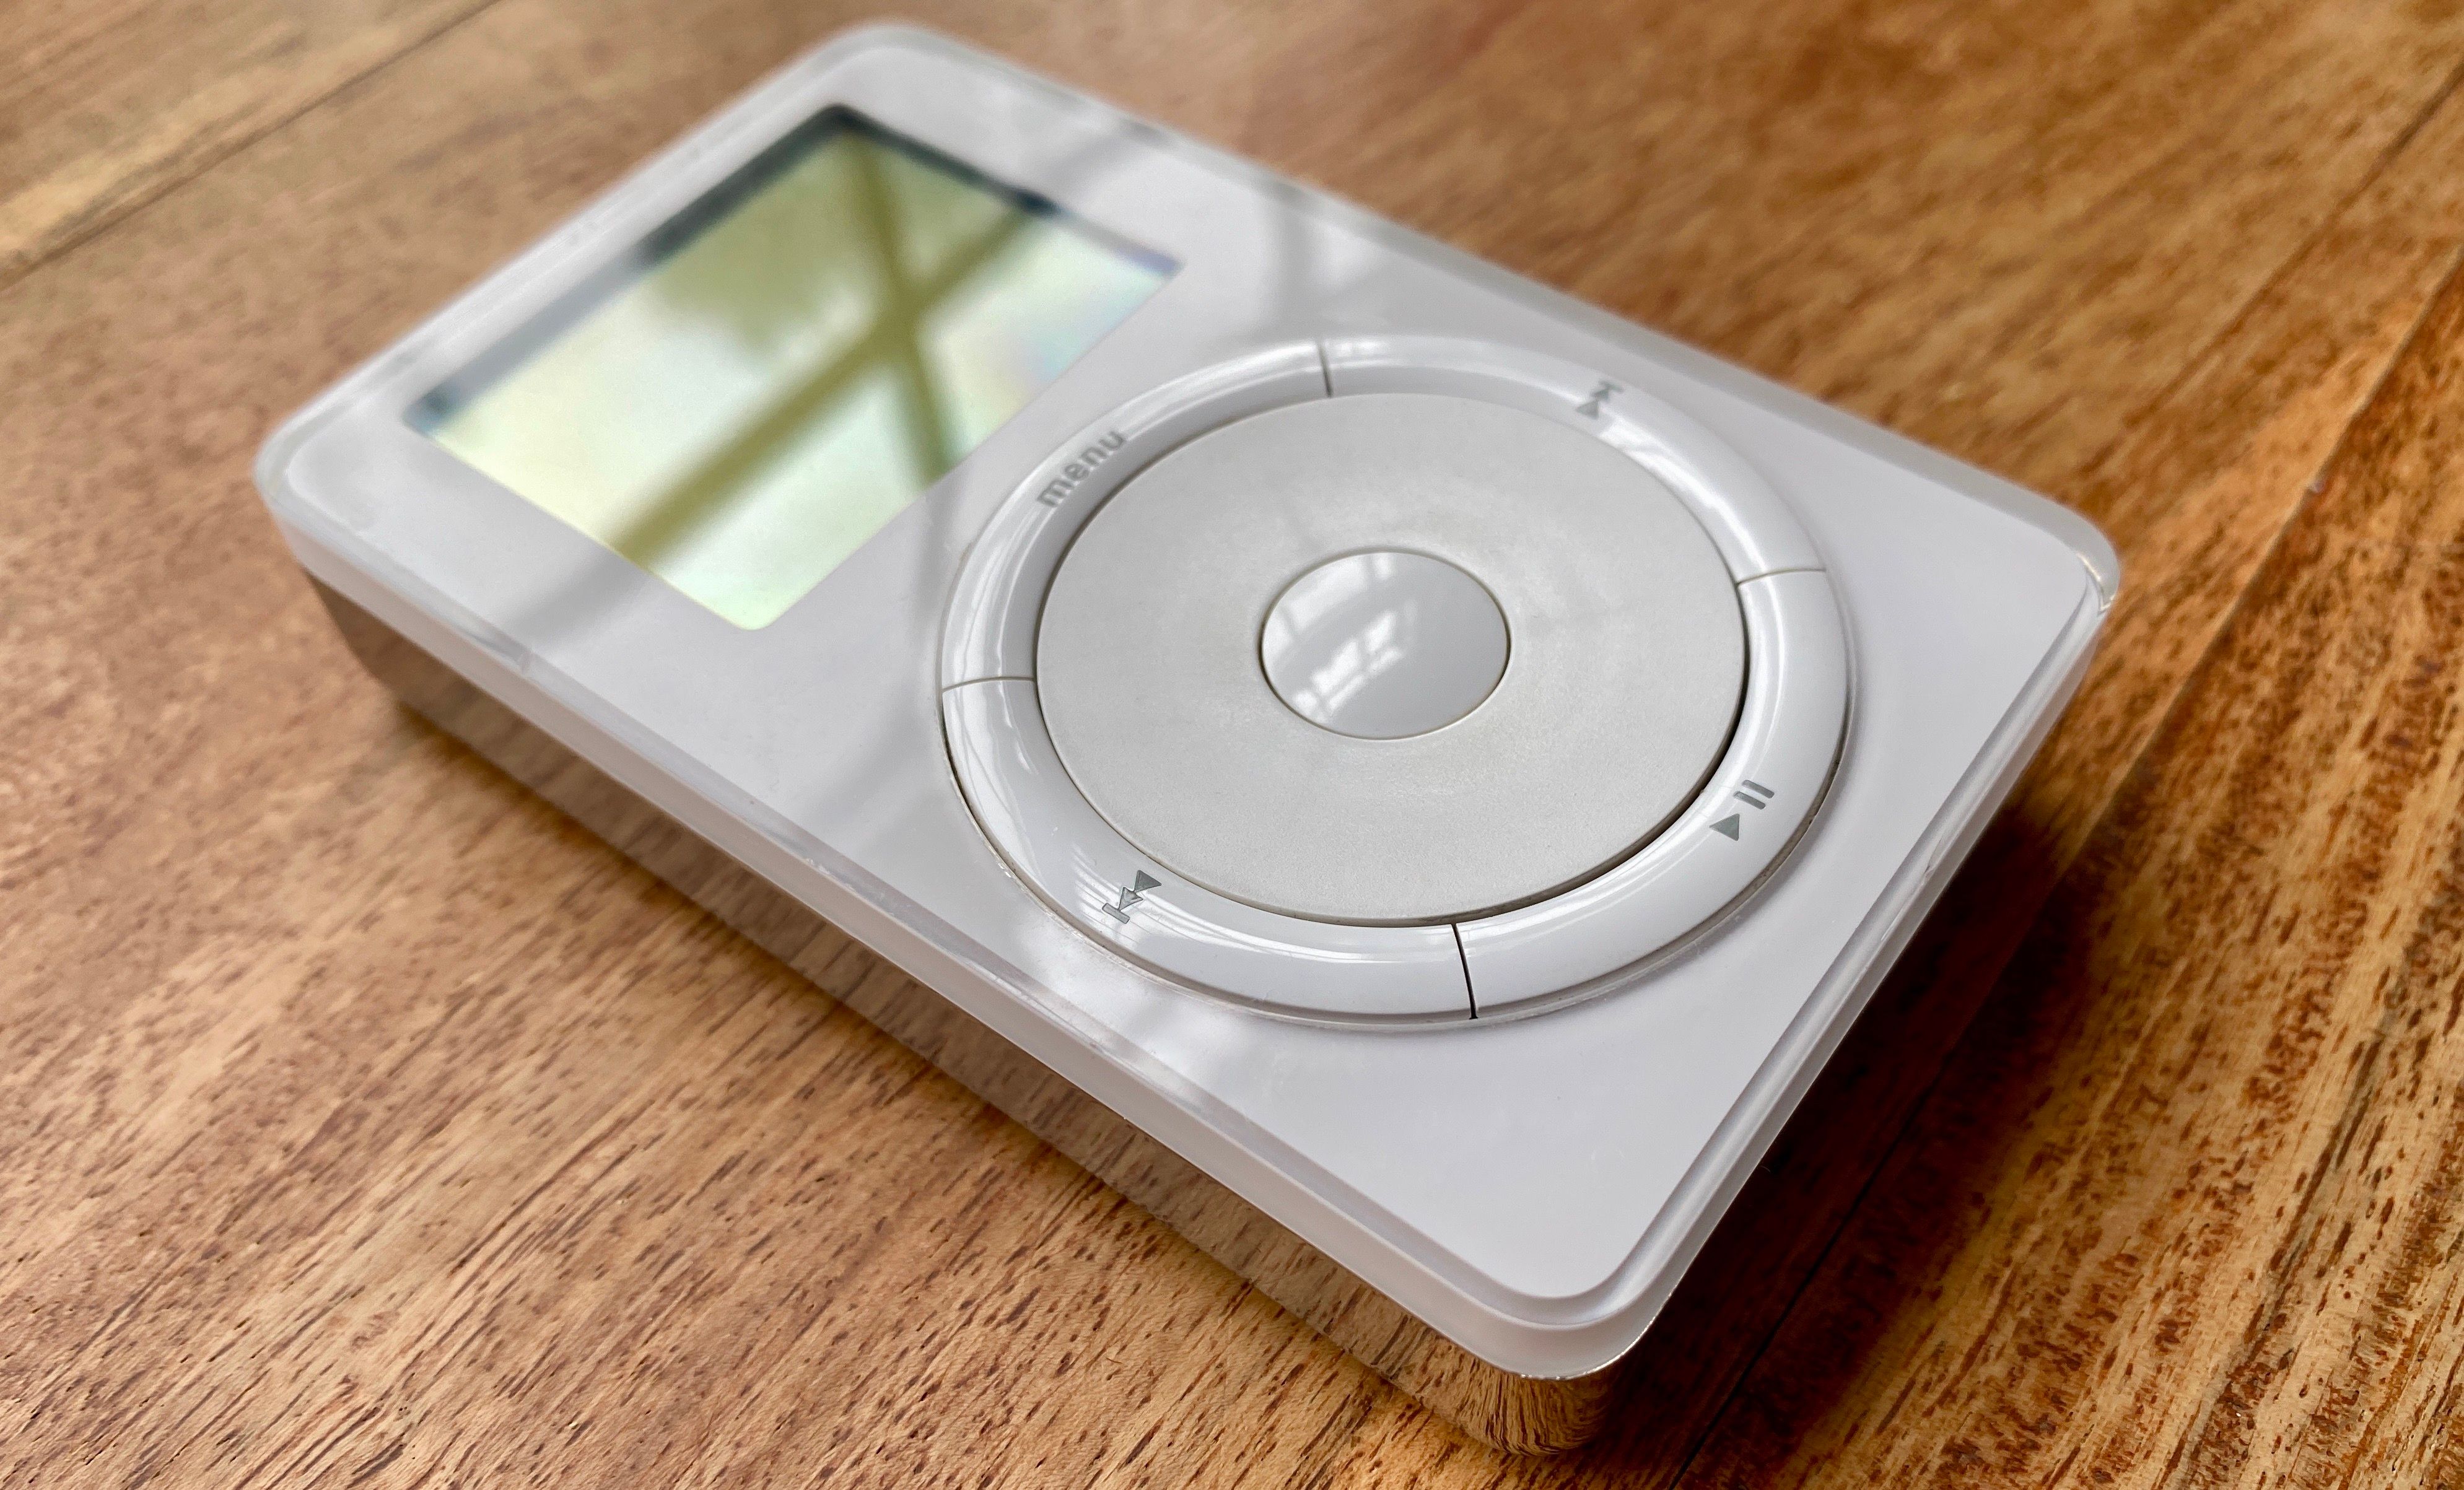 Original 5GB iPod lying on a table